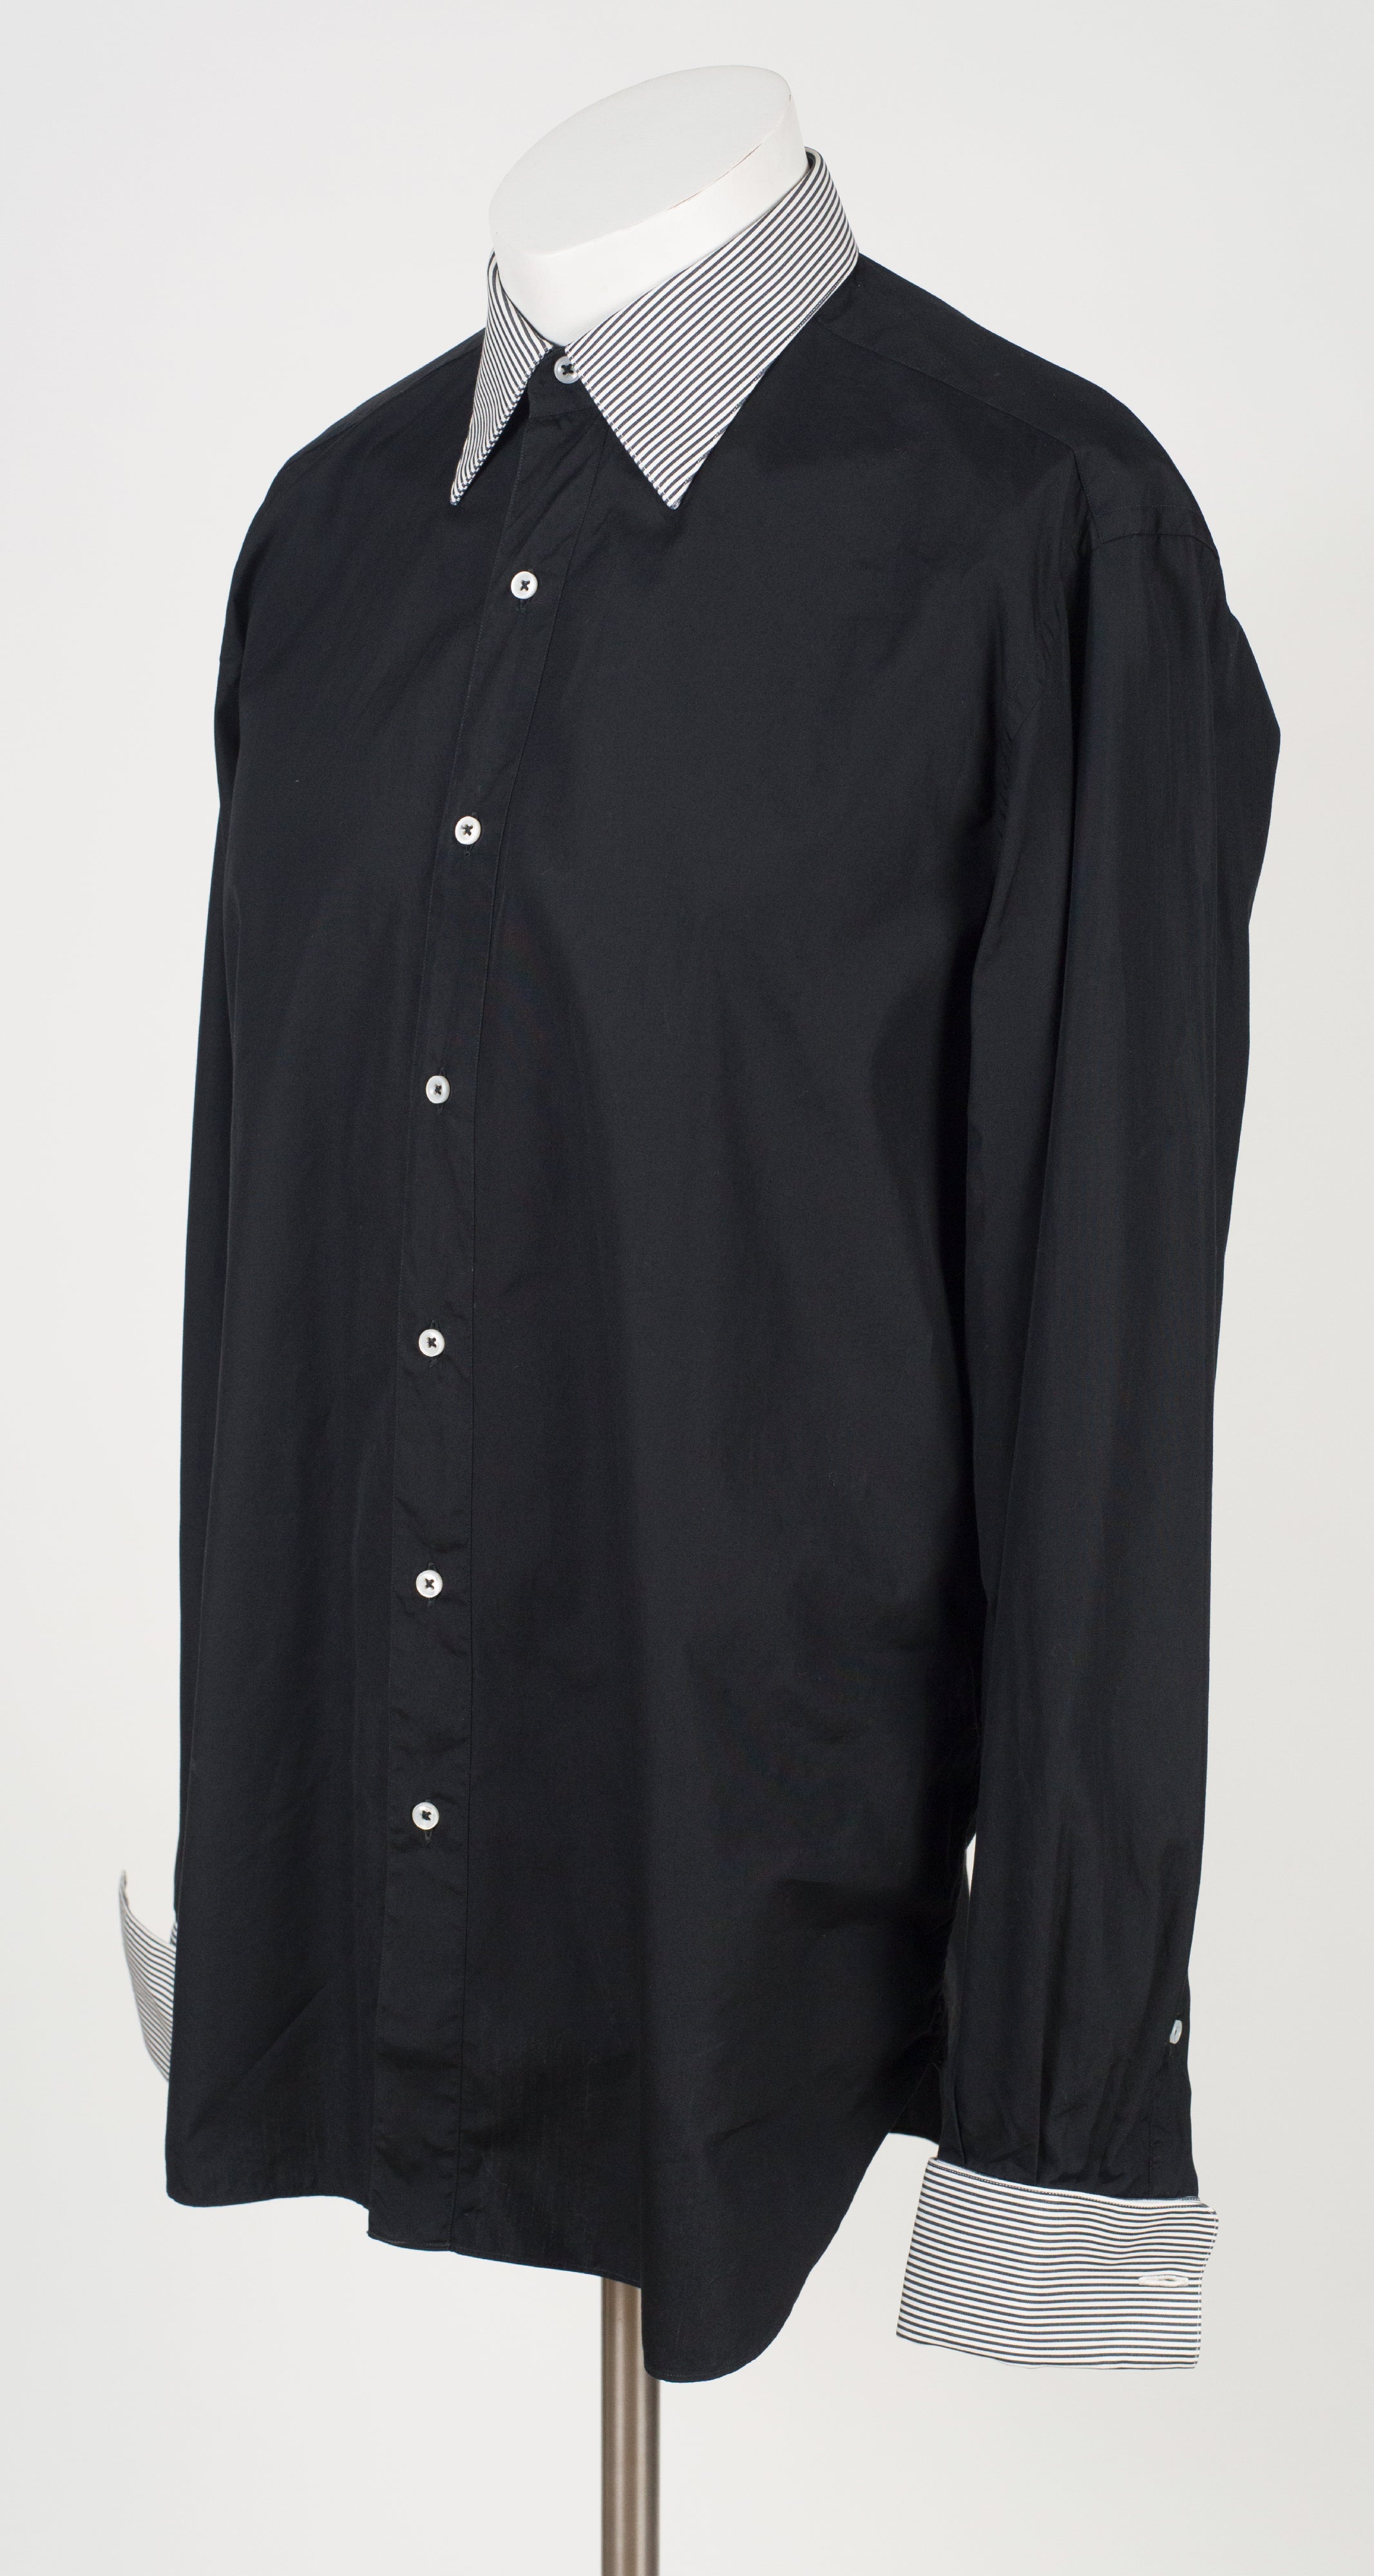 1990s Men's Striped Black & White Cotton French Cuff Dress Shirt